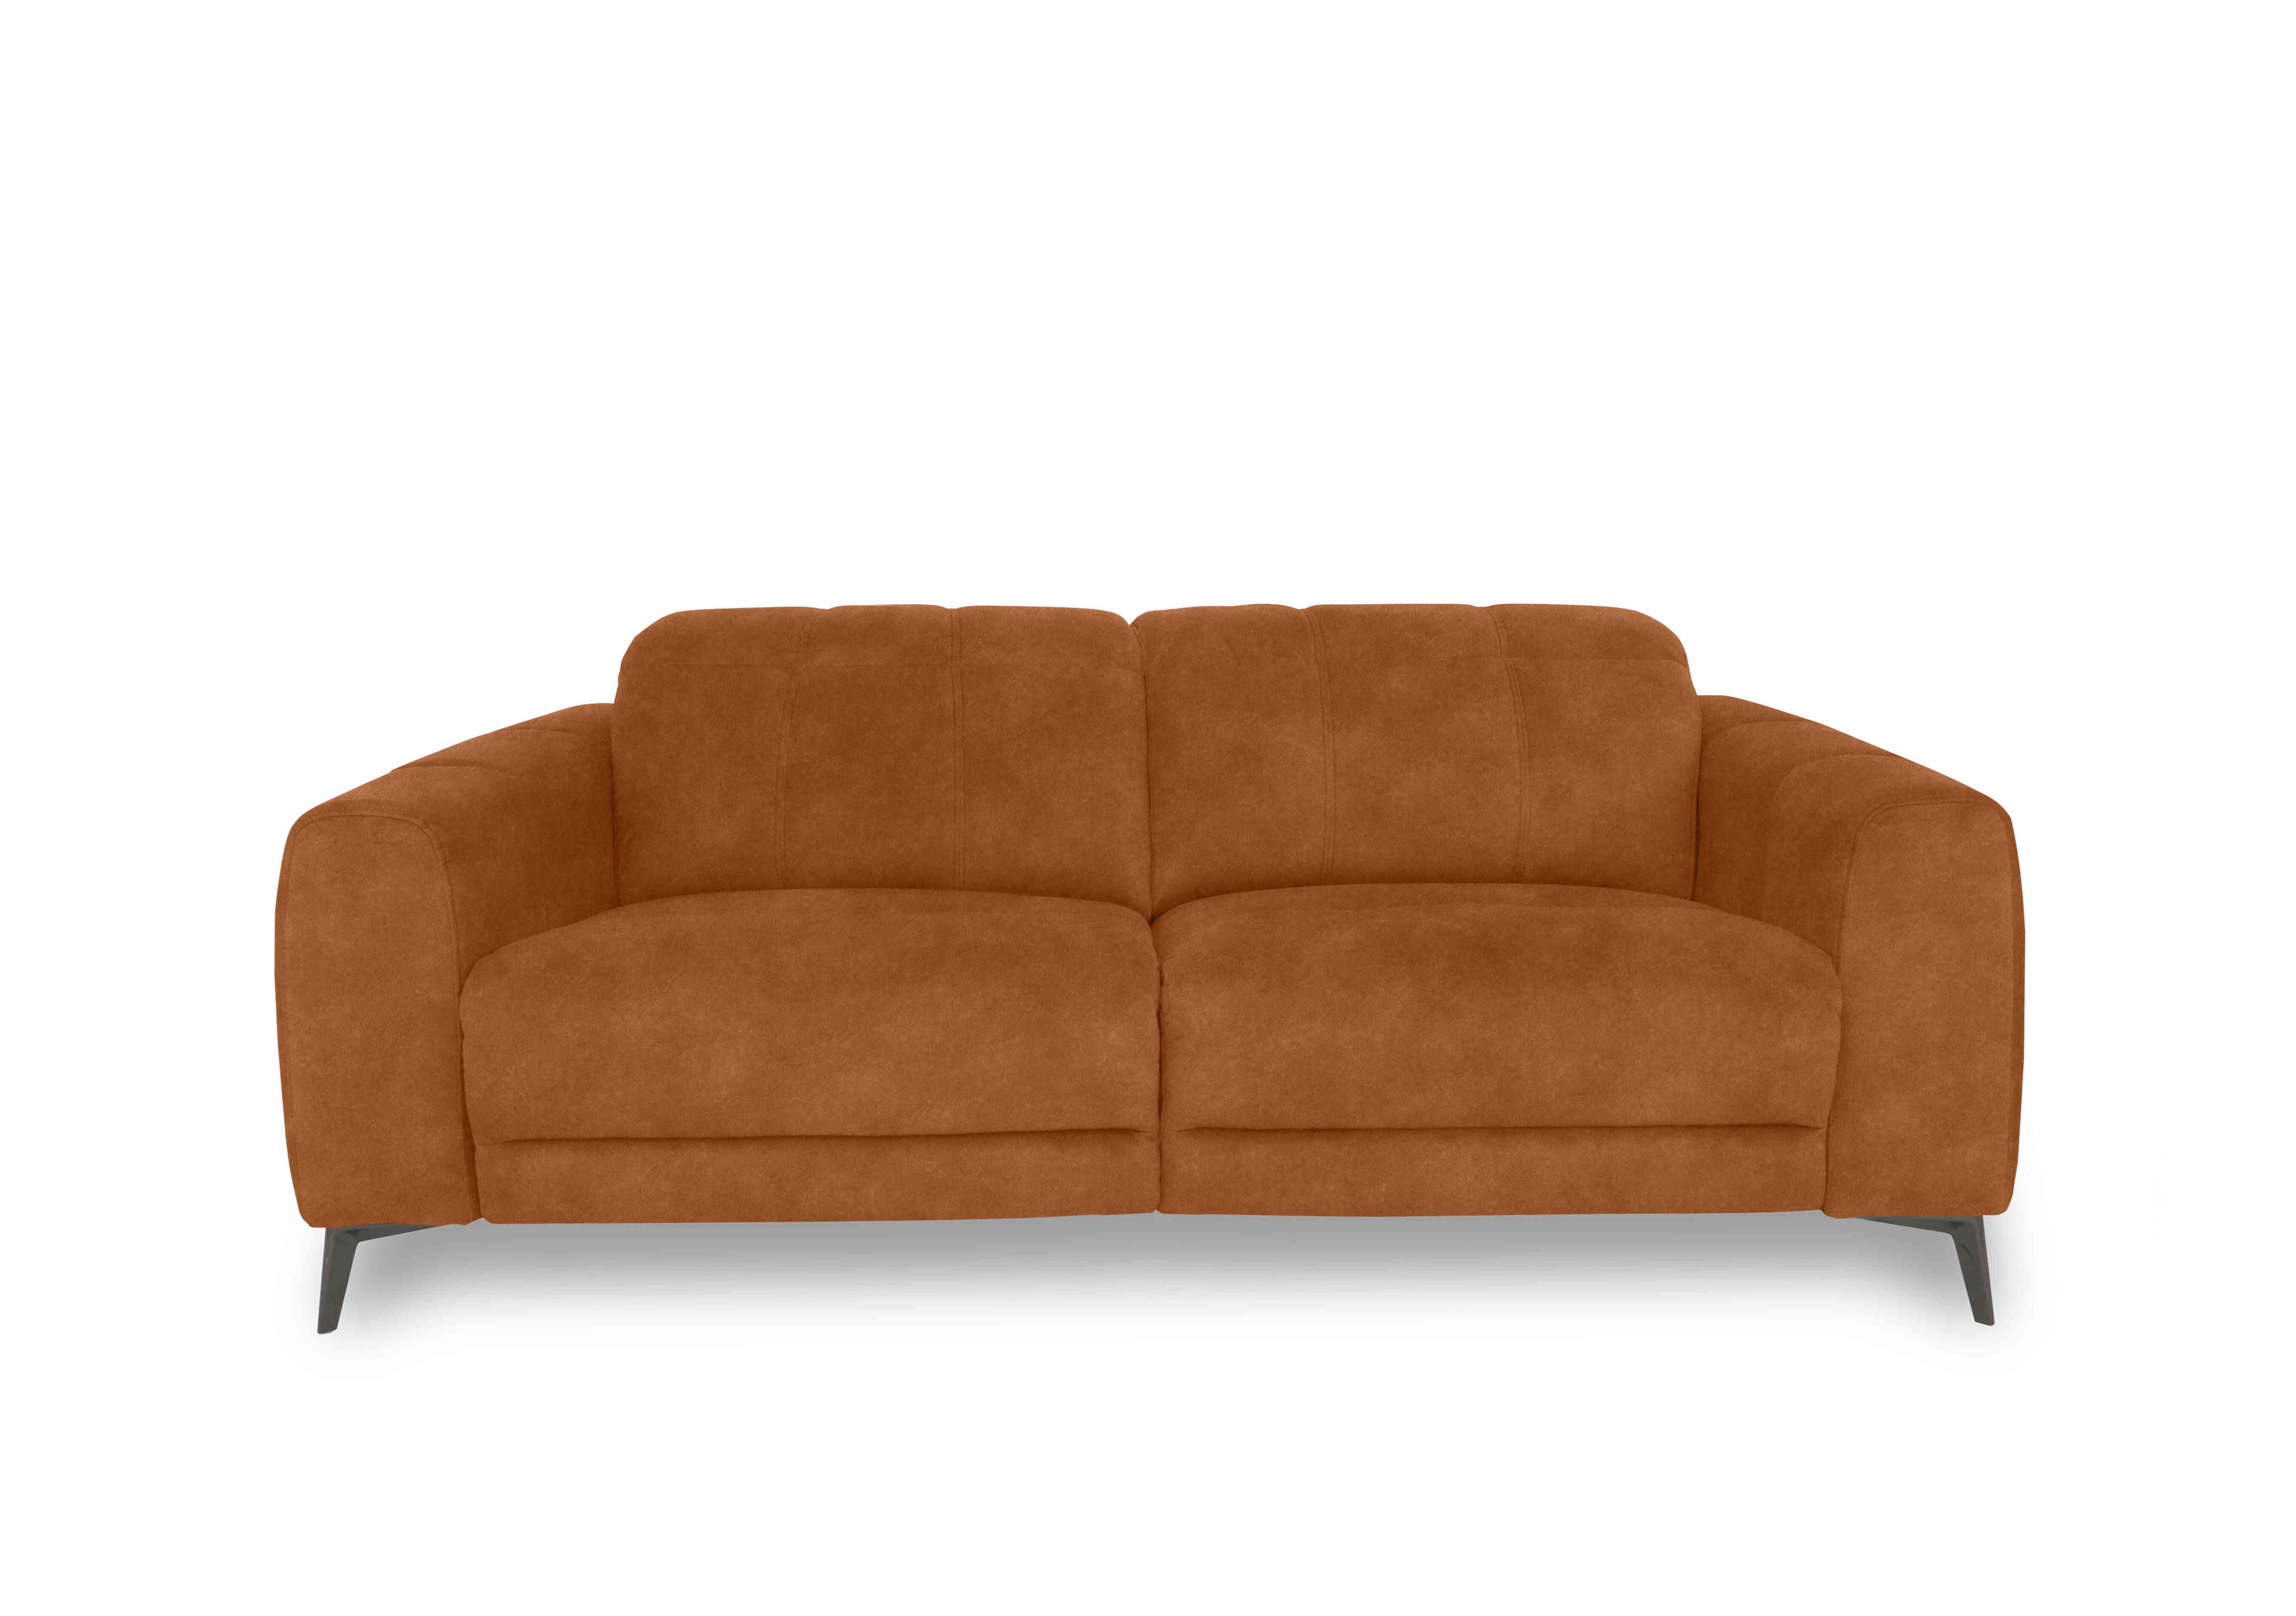 Ezra 3 Seater Fabric Sofa in Dexter 43509 Pumpkin on Furniture Village